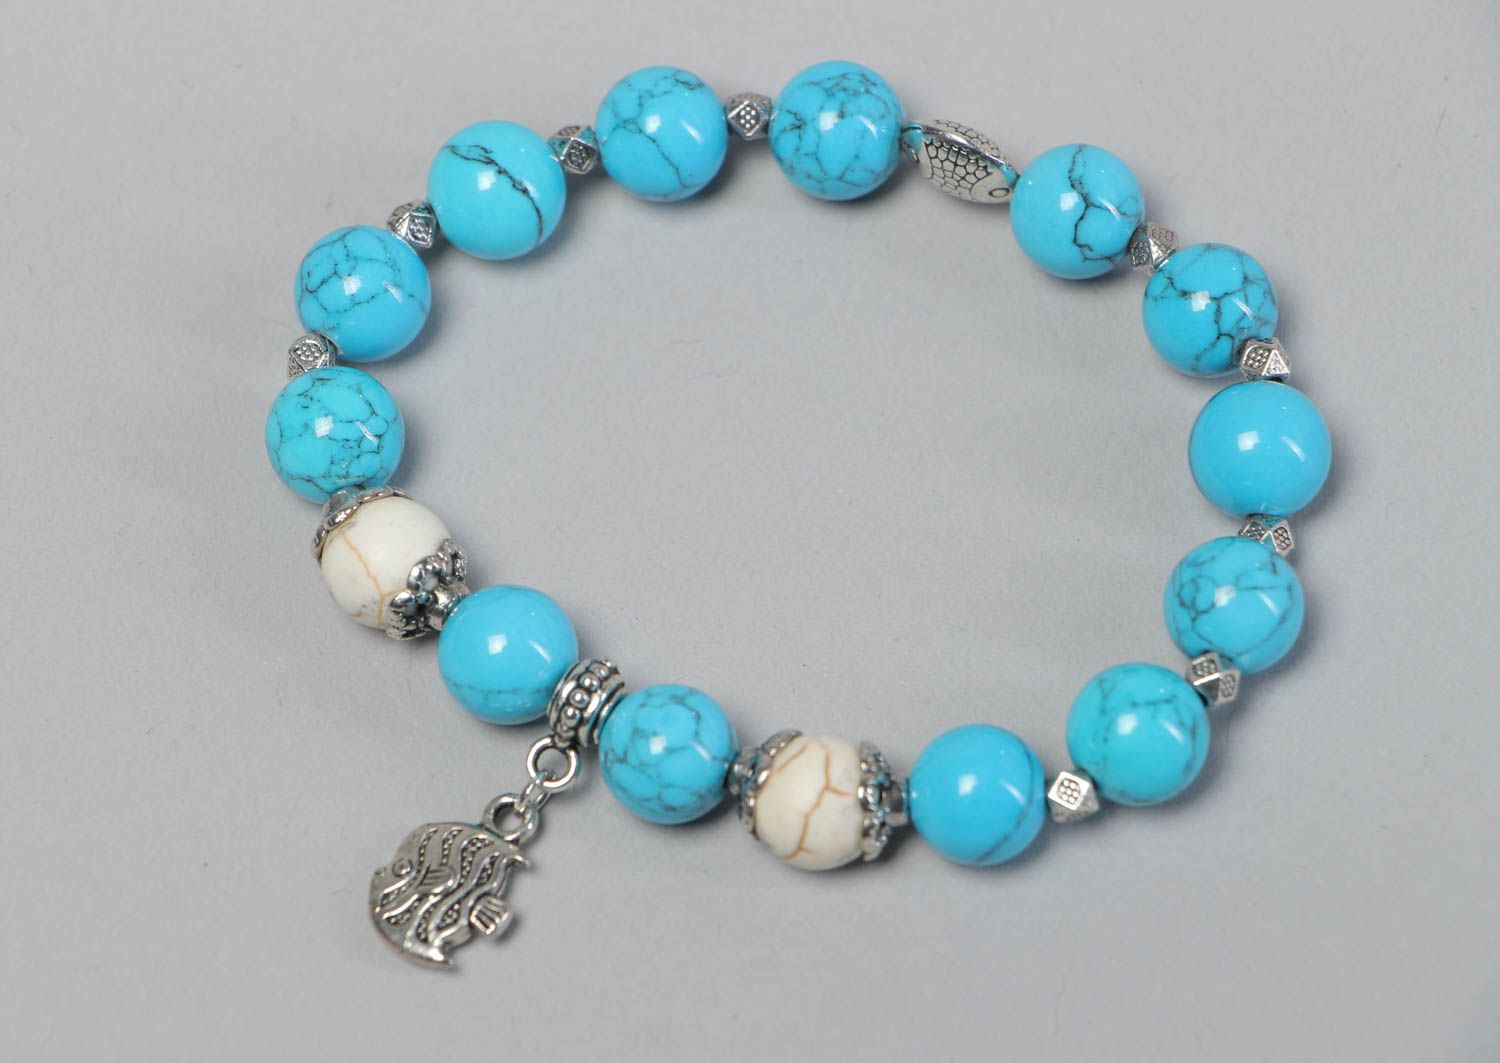 Handmade turquoise bracelet stylish designer accessory jewelry with charms photo 1